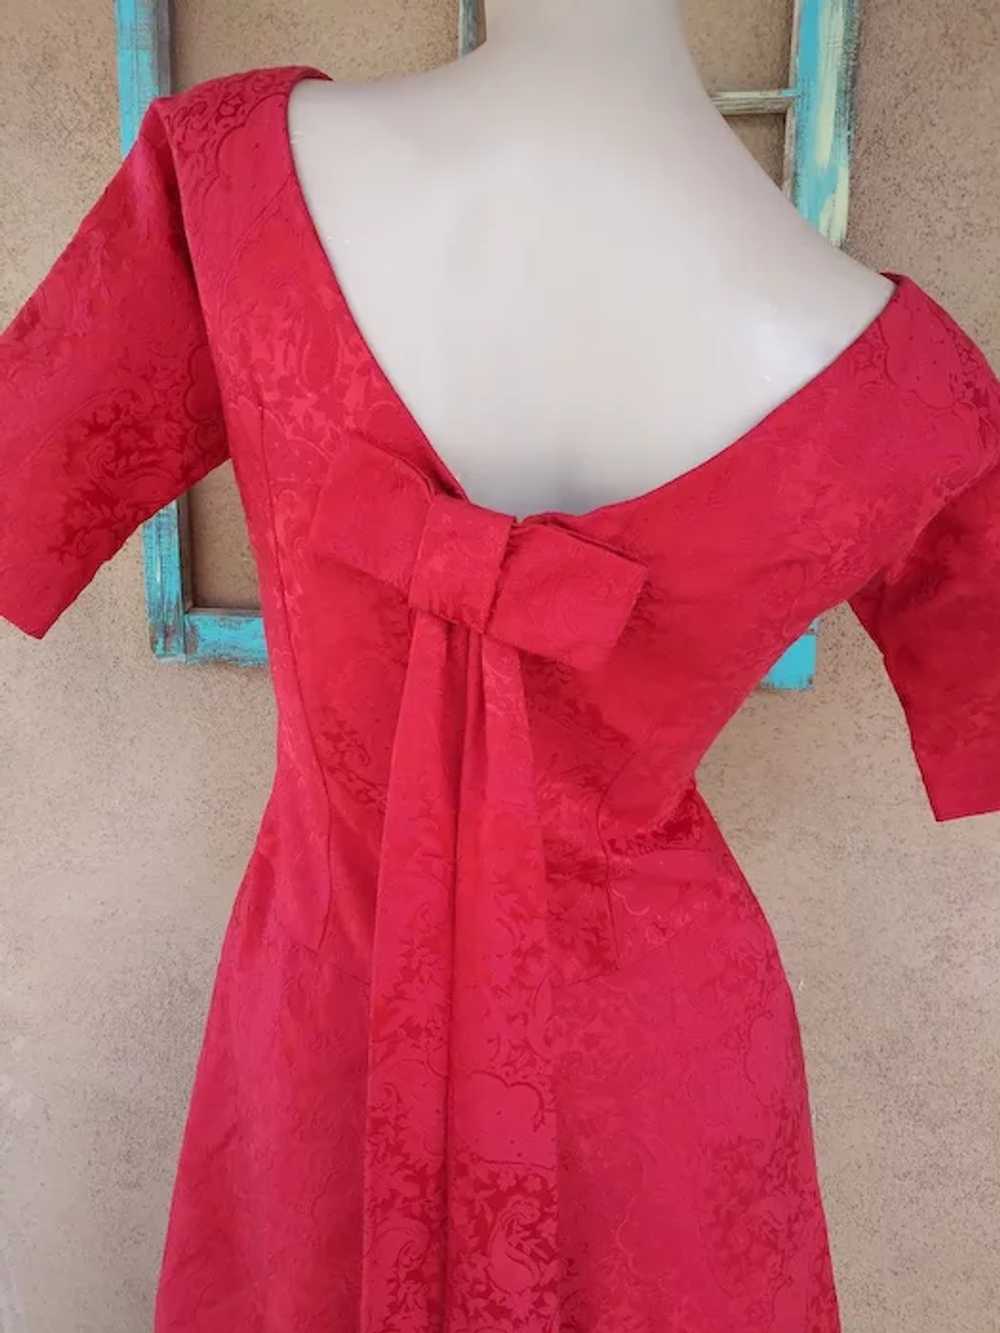 1960s Red Brocade Gown Wedding Dress Sz S W26 - image 5